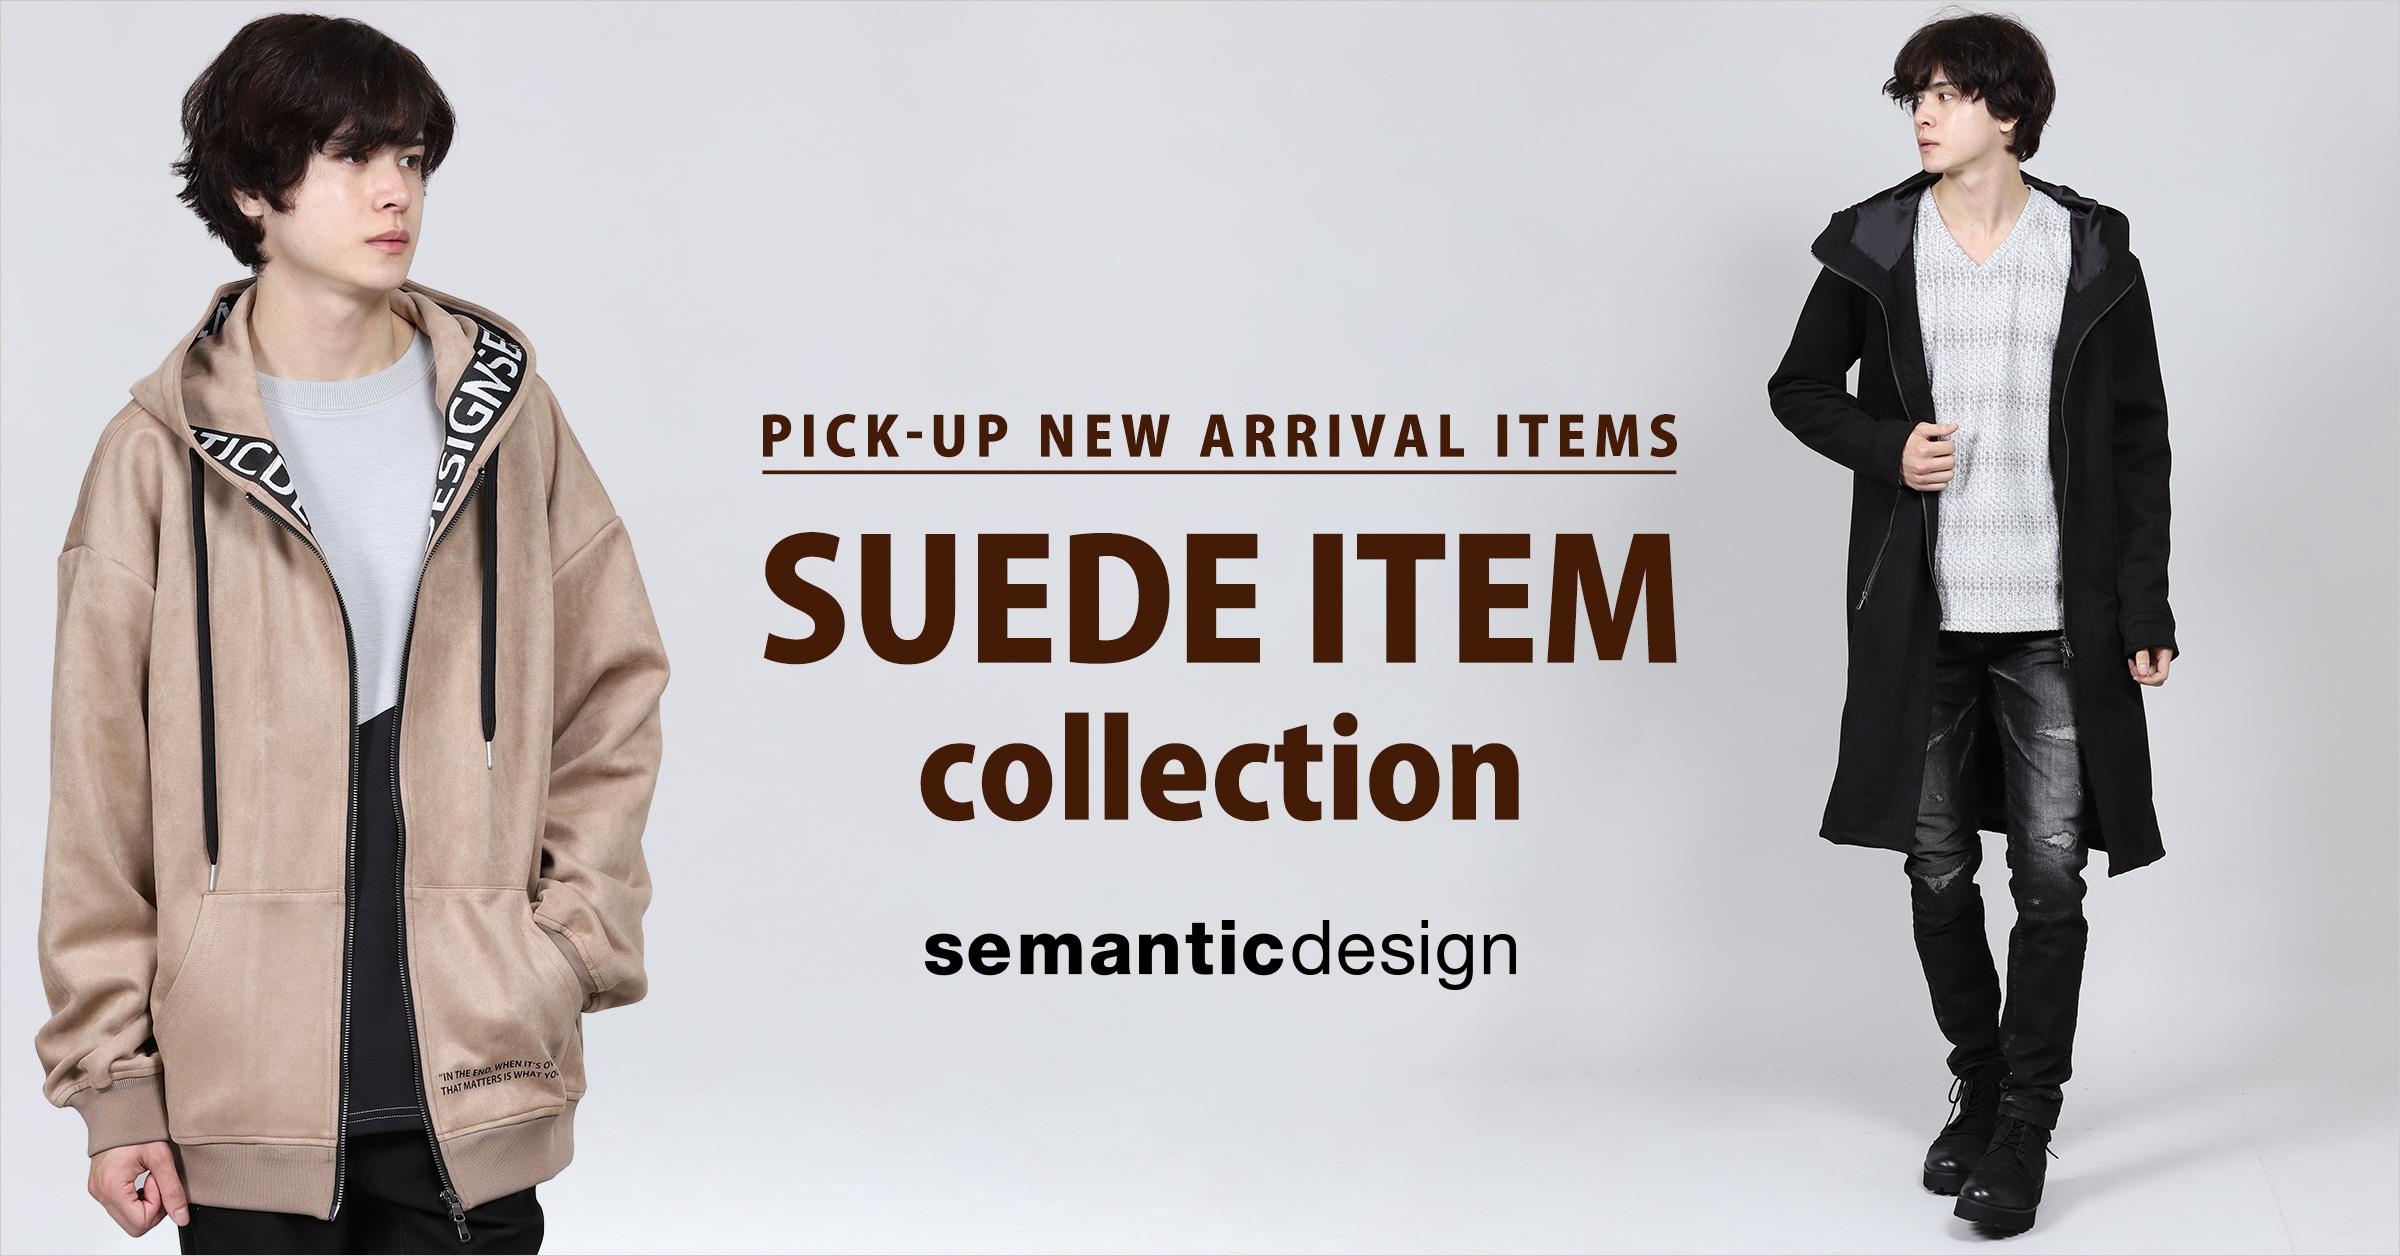 semanticdesign(セマンティックデザイン) SUEDE ITEM
collection